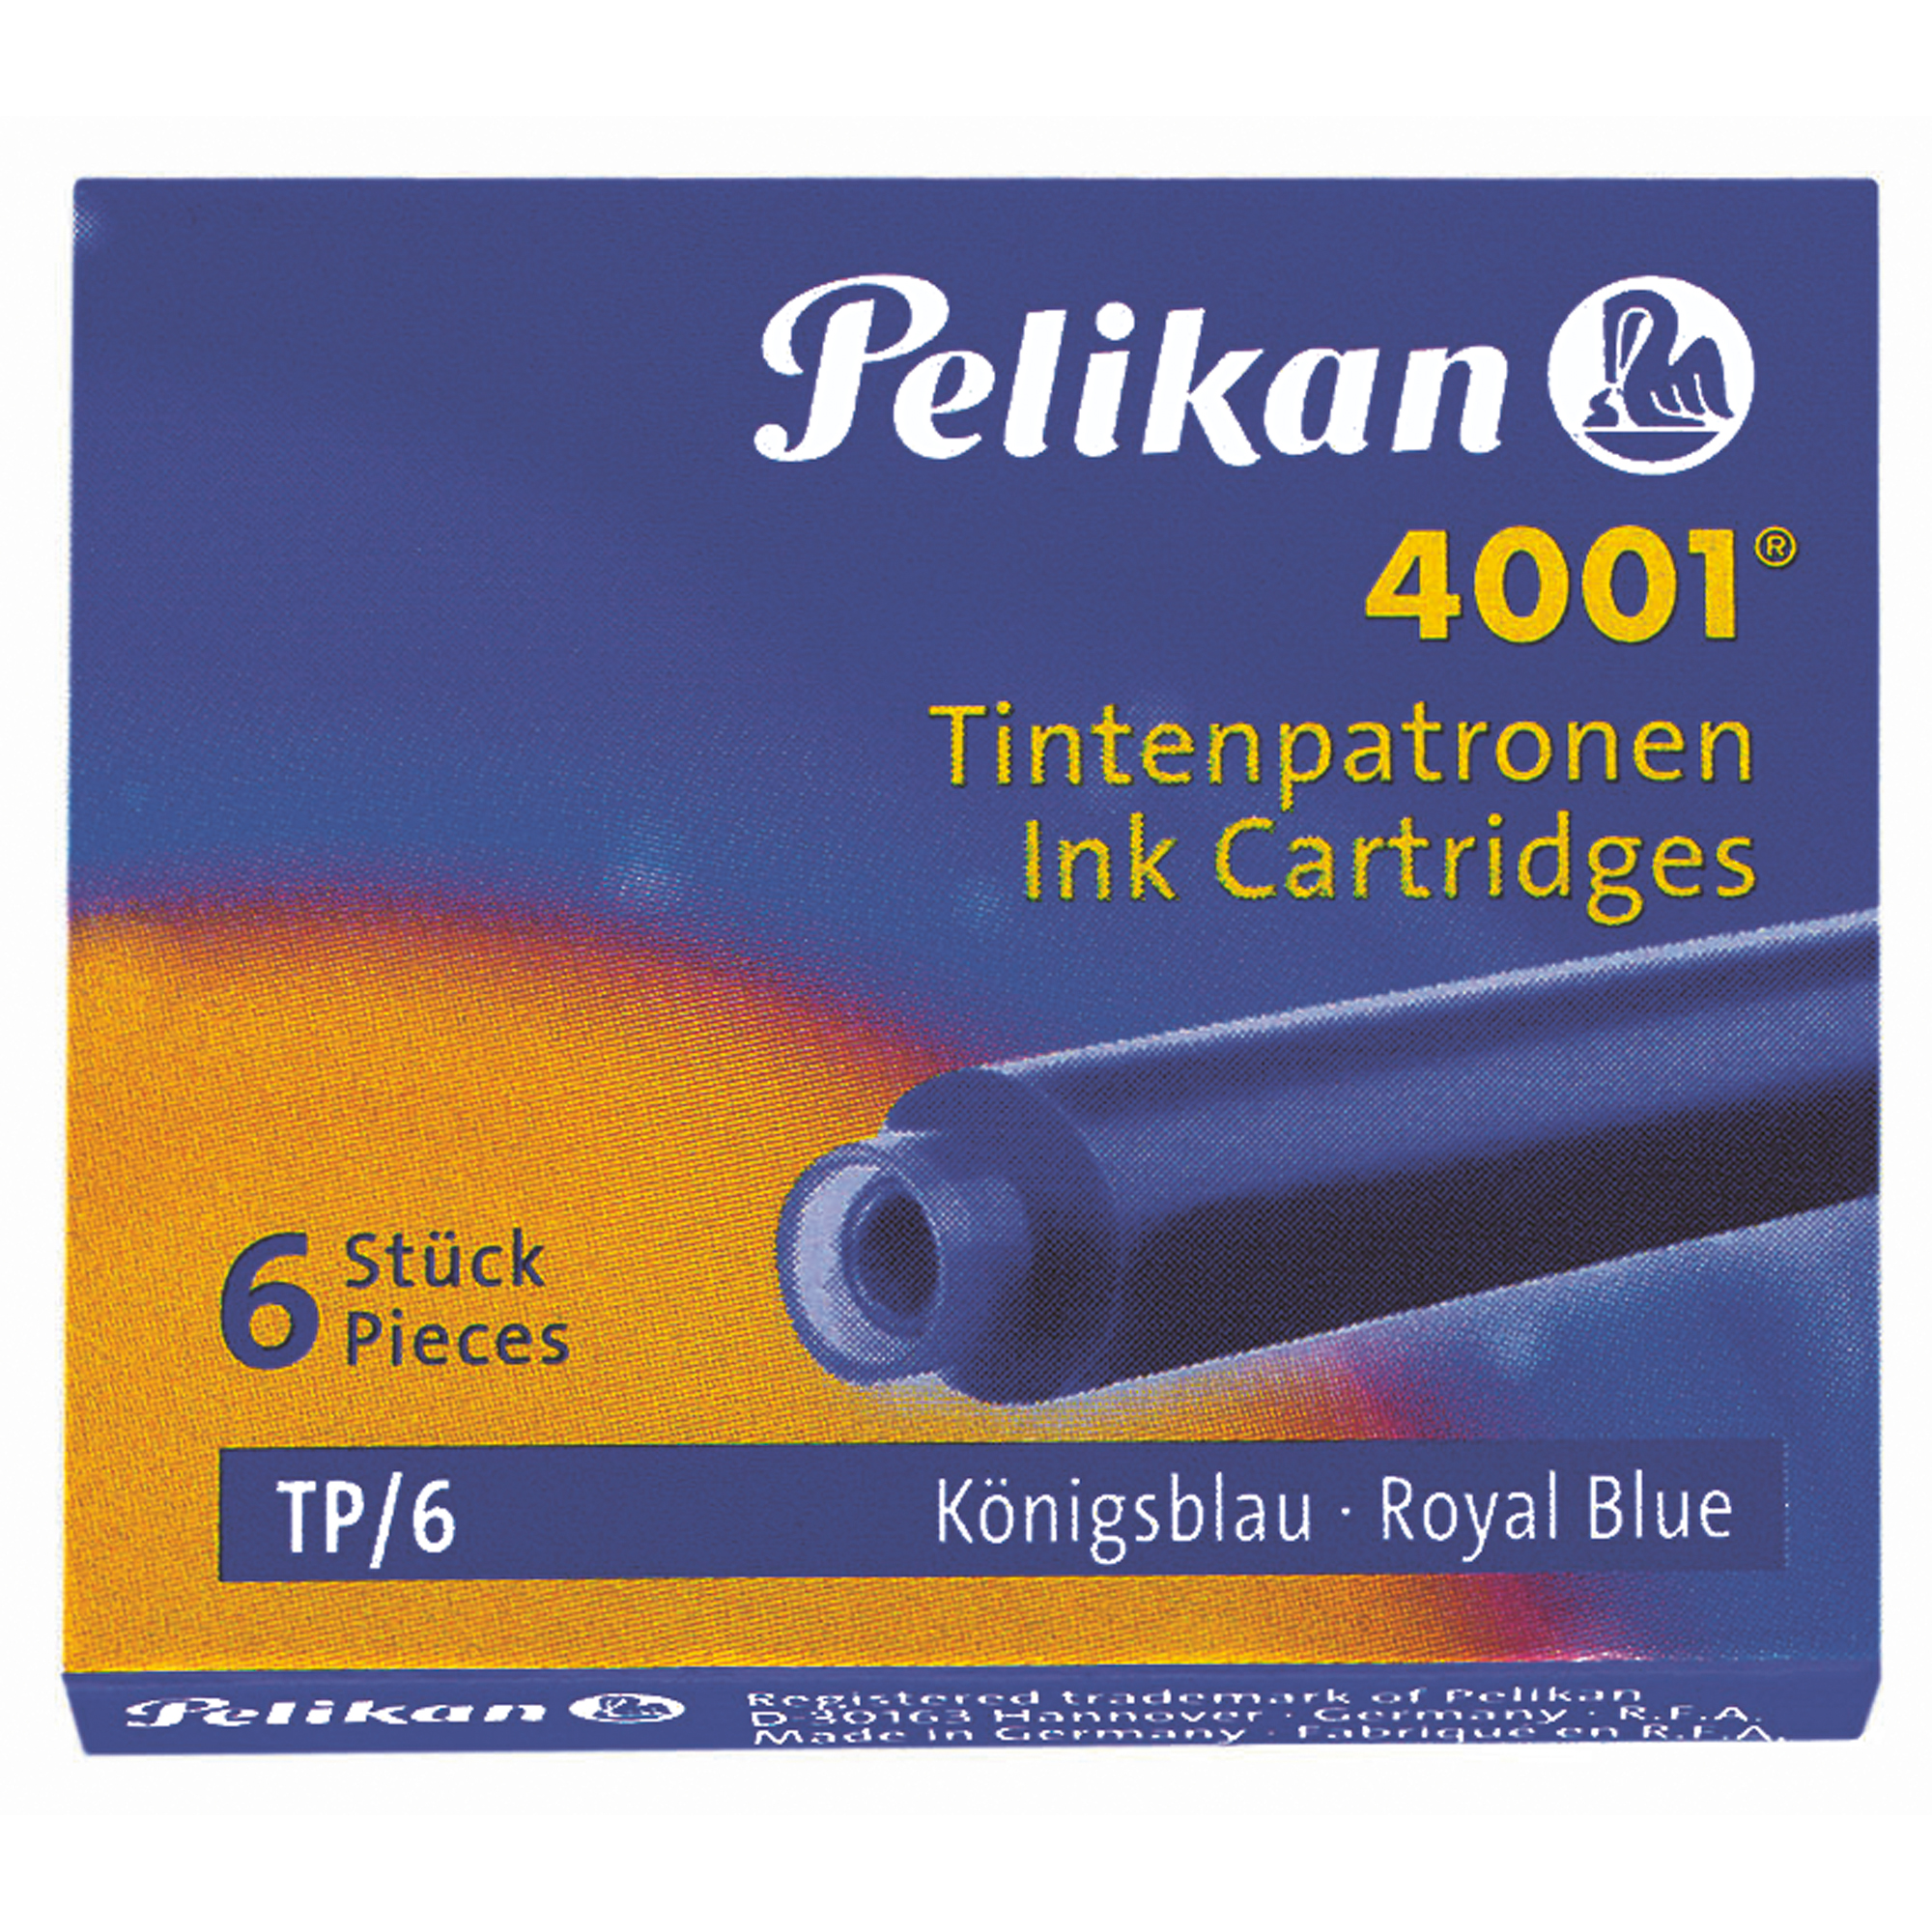 Pelikan Tintenpatrone 4001 TP/6 nicht löschbar blau, schwarz